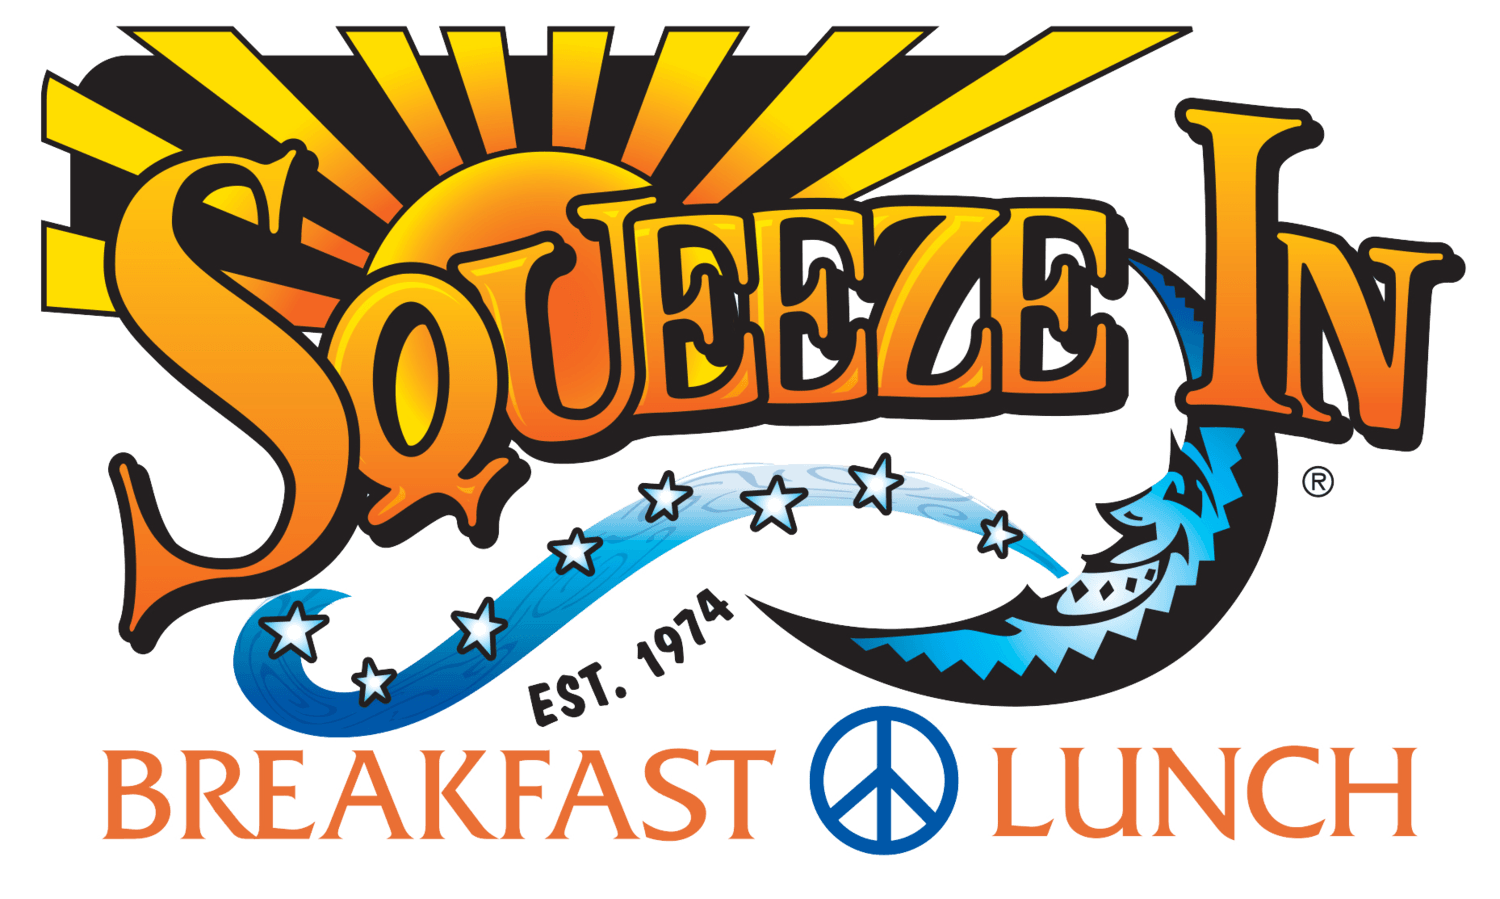 Squeezer Logo - Squeeze In